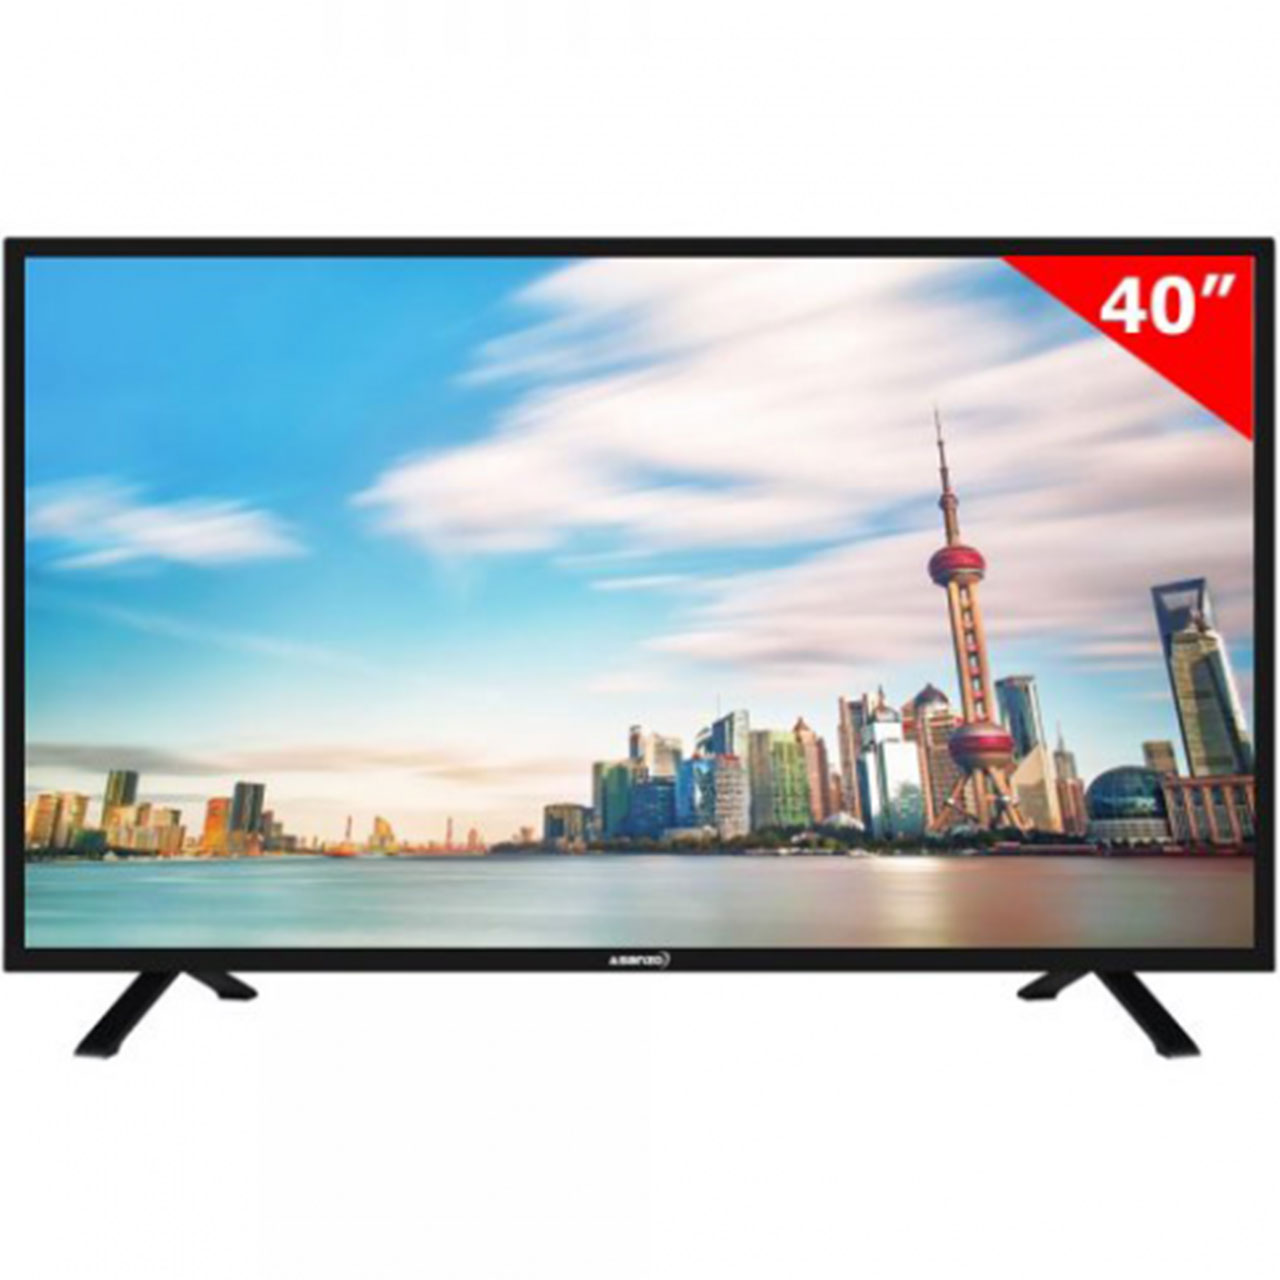 Tivi Asanzo 40 Inch 40AT330 Full HD giá rẻ nhất | Dienmaythienphu